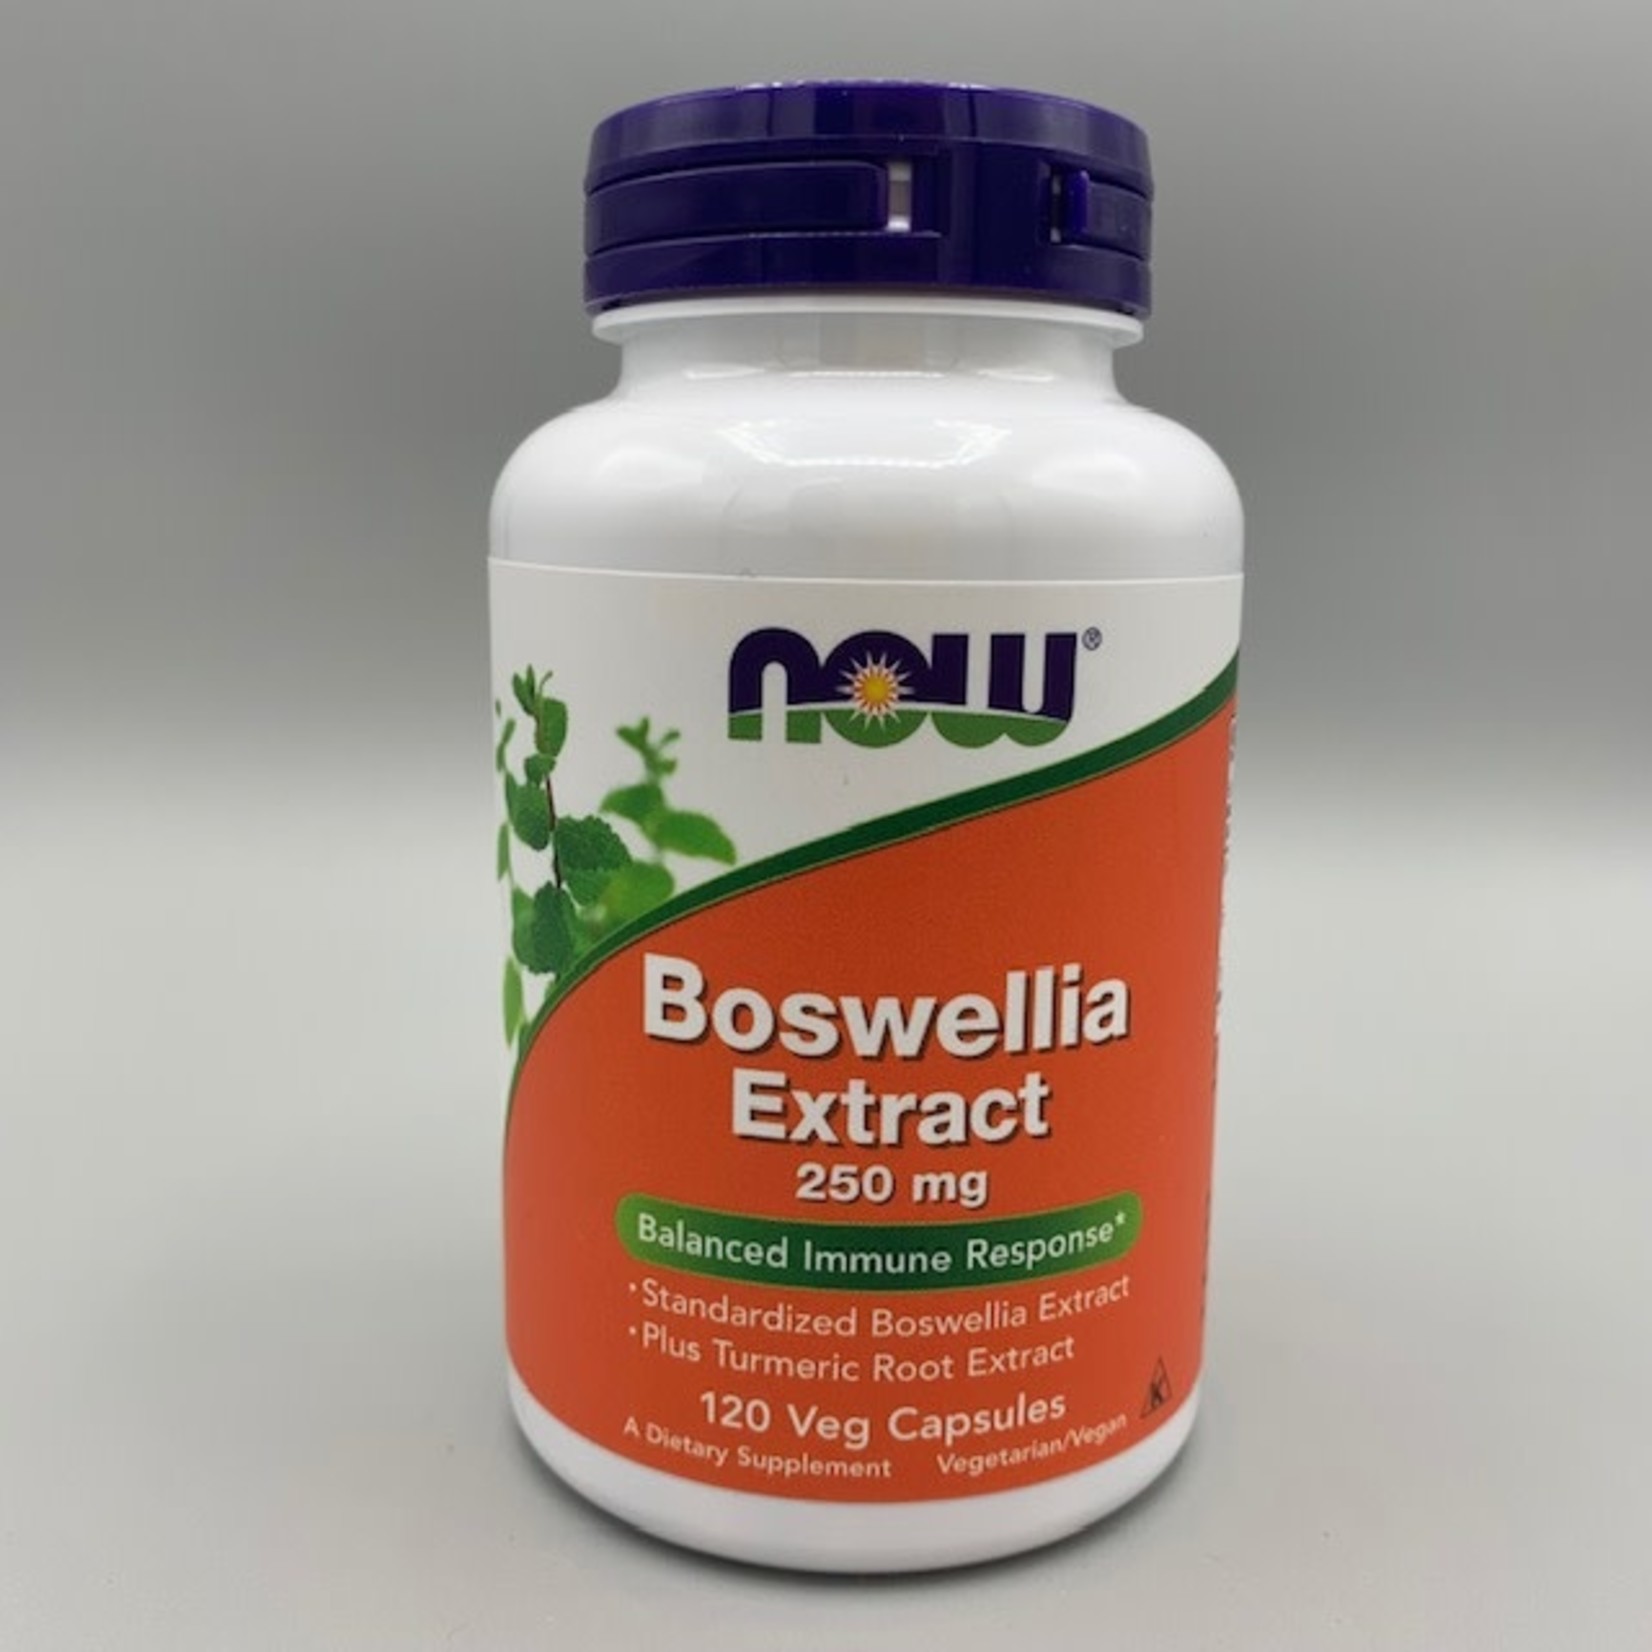 NOW NOW Boswellia Extract - 250 mg, 120 Veg. Capsules